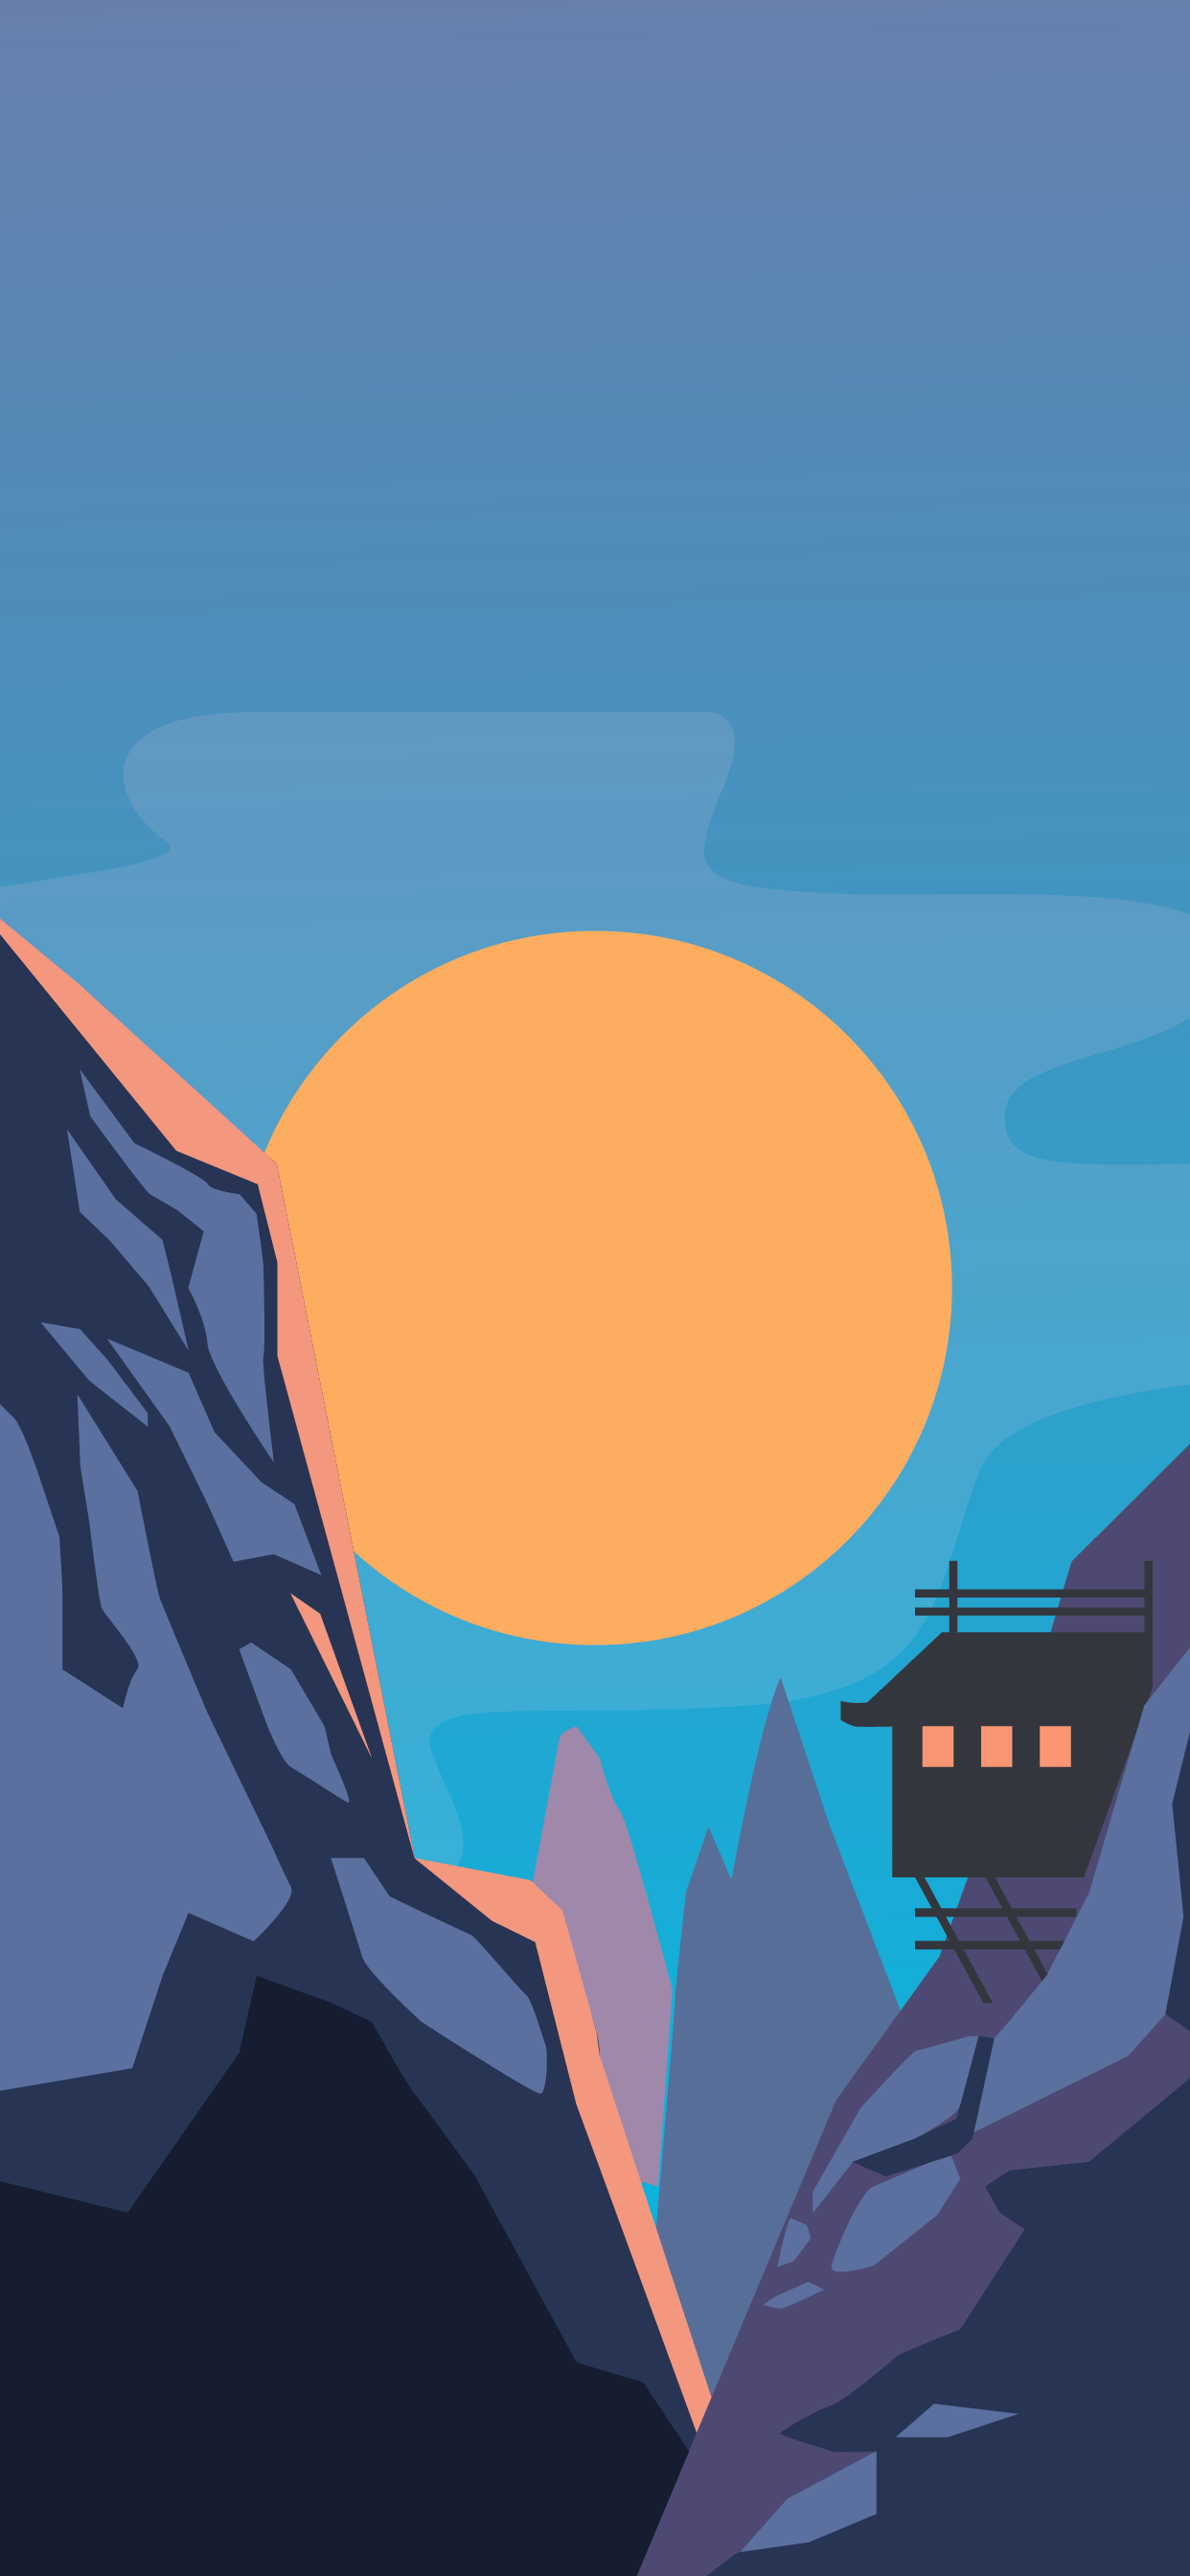 MInimalist phone wallpaper in the Mountain Sunset